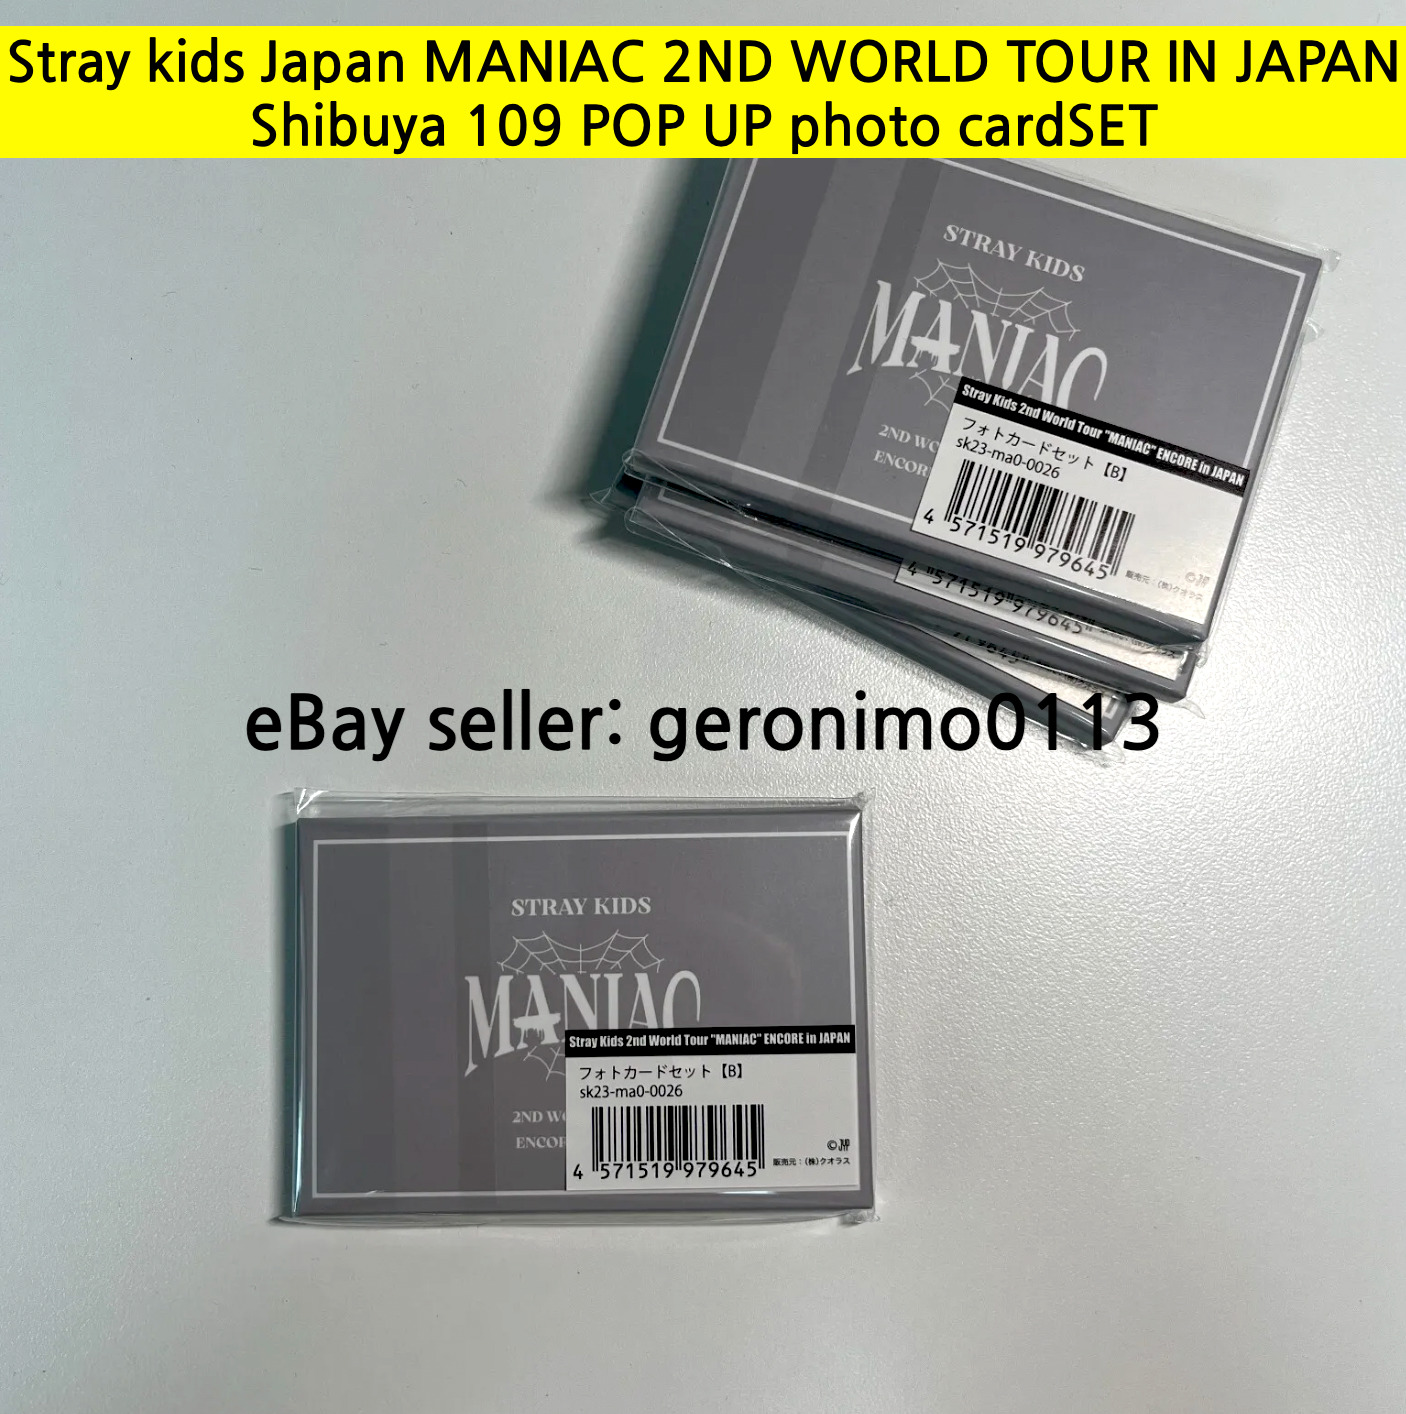 [ON HAND] Stray kids Japan MANIAC 2ND WORLD TOUR IN JAPAN Shibuya 109 POP UP